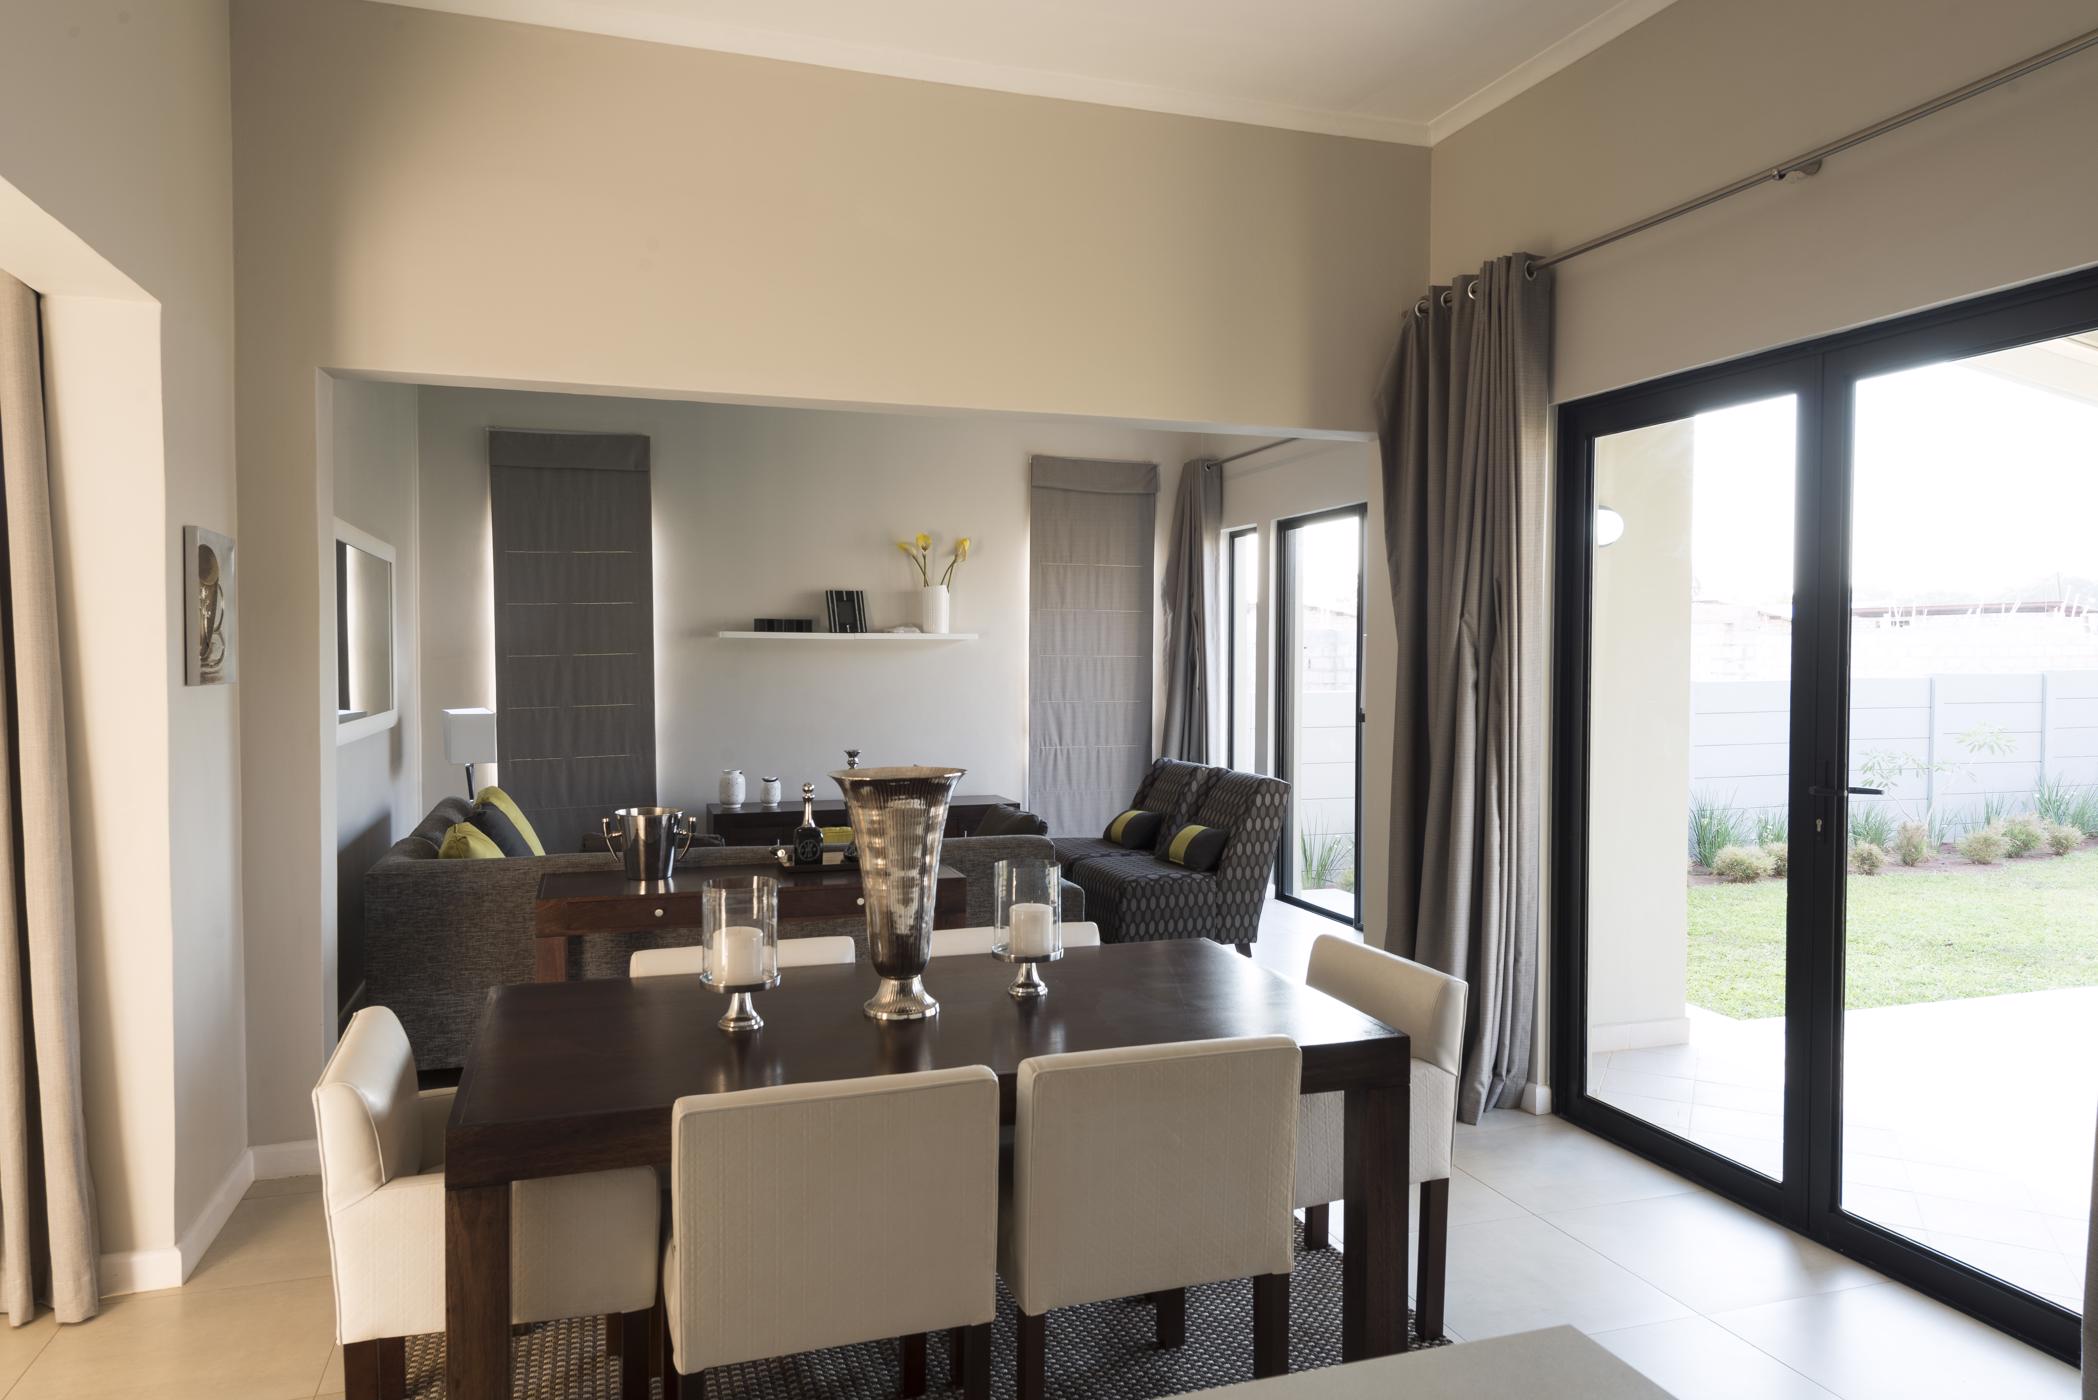 3 Bedroom House Plans In Zambia Pdf